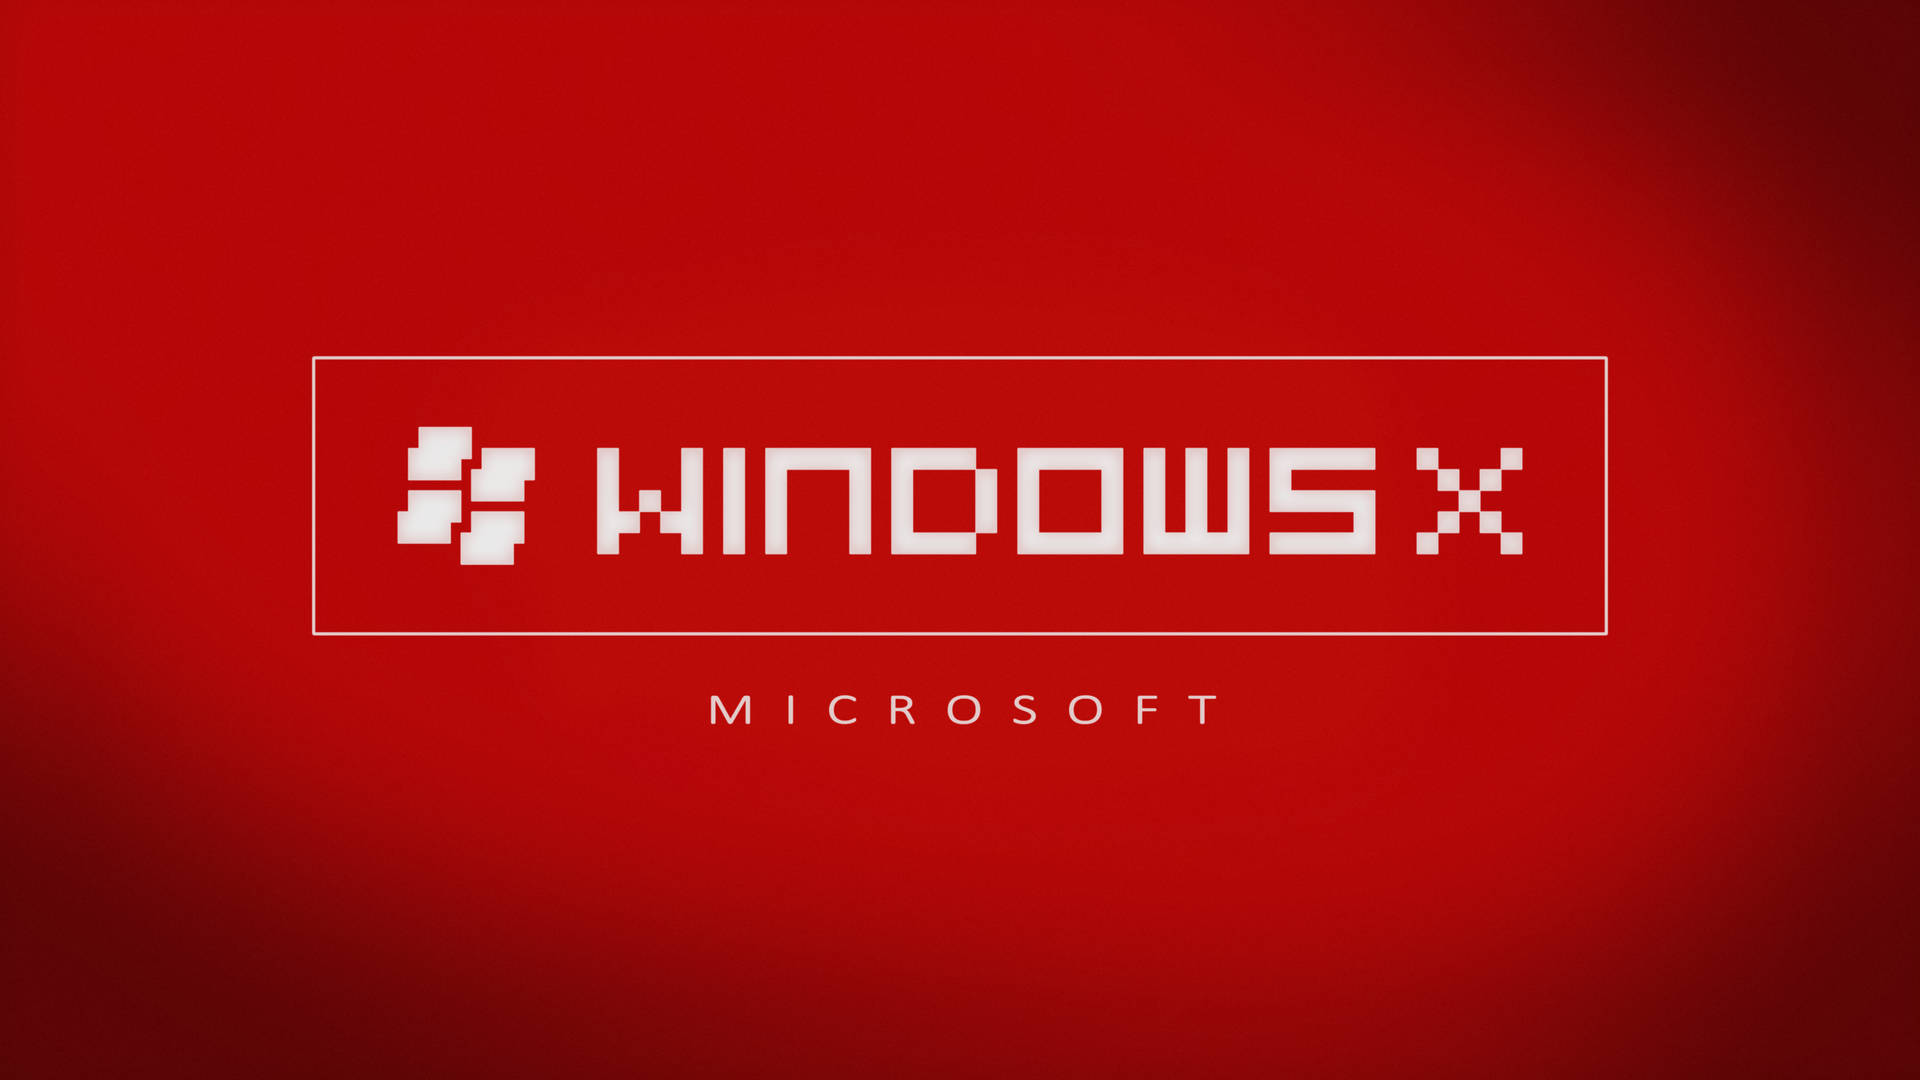 Windows 10 Hd Red X Background